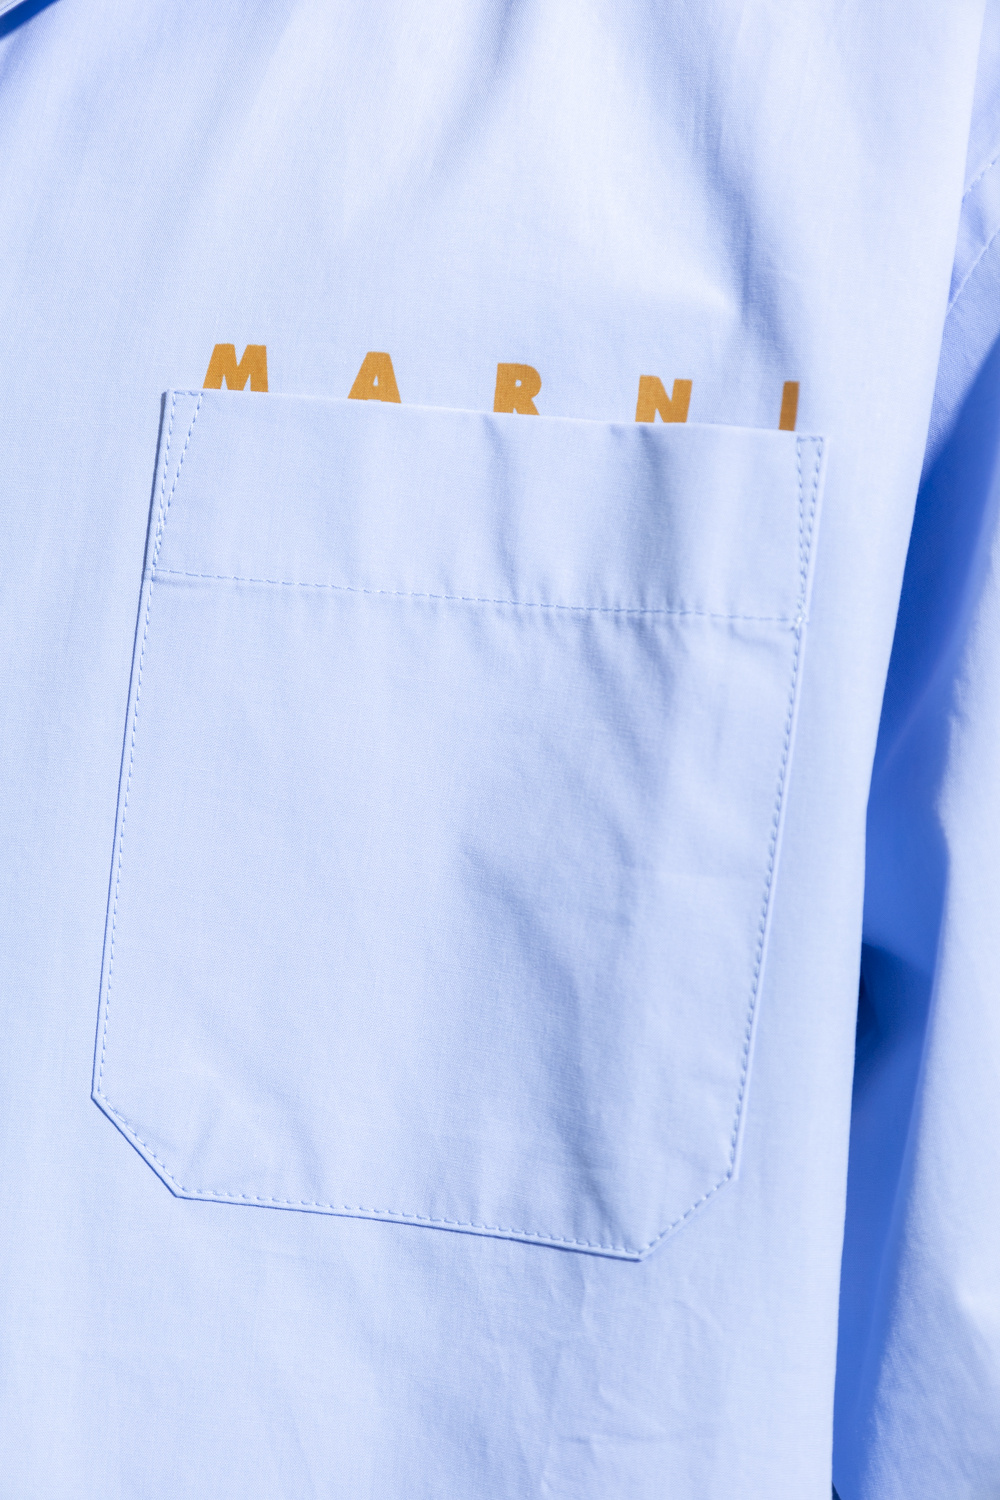 Marni Jacquard-Handtasche von MARNI